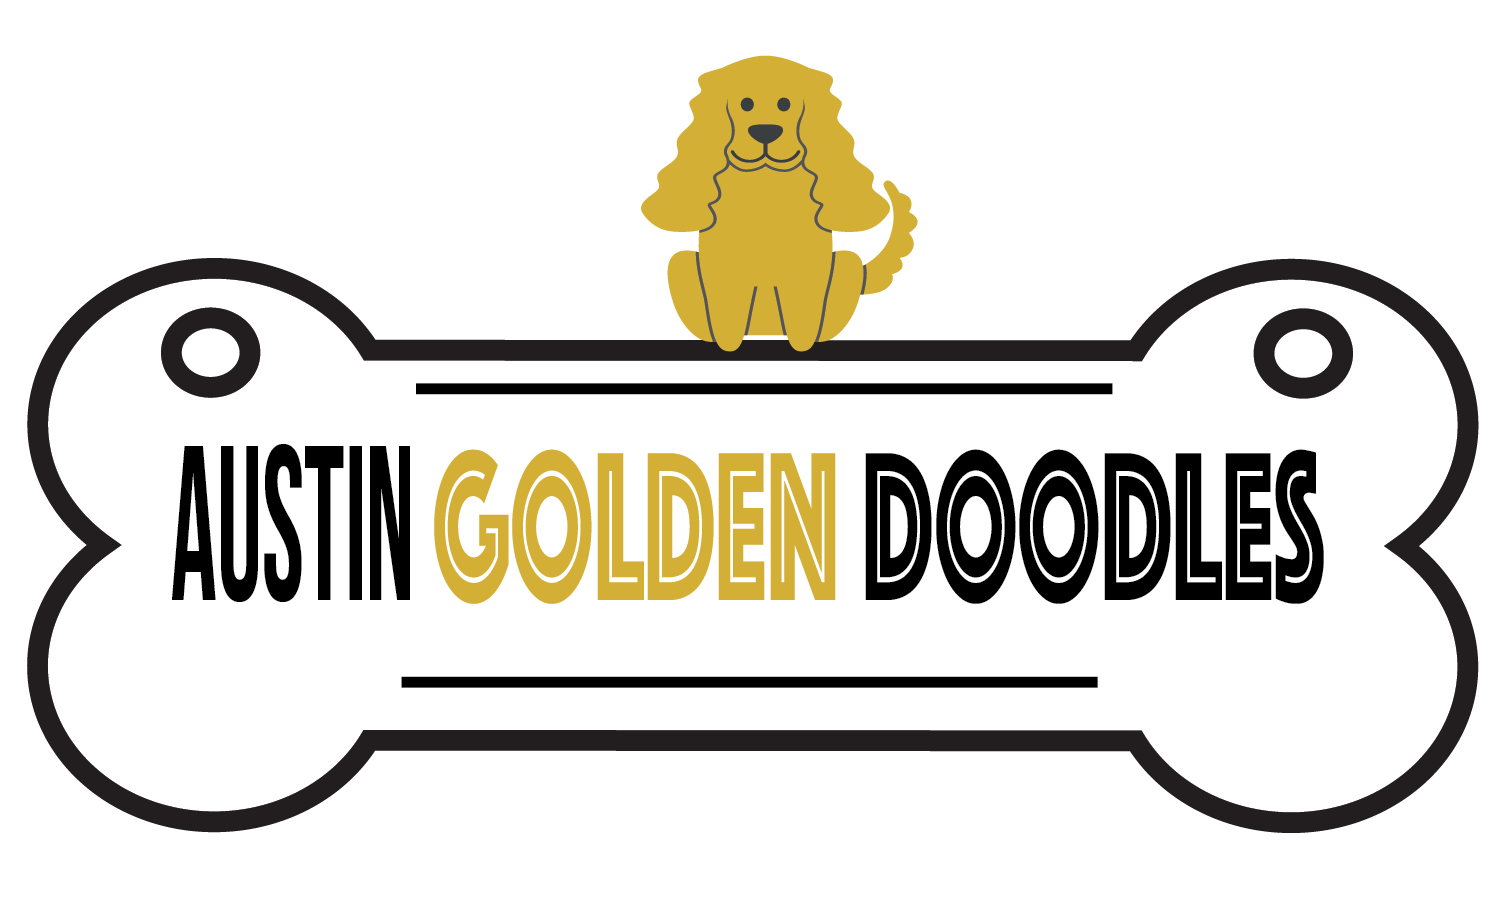 Austin Golden Doodles